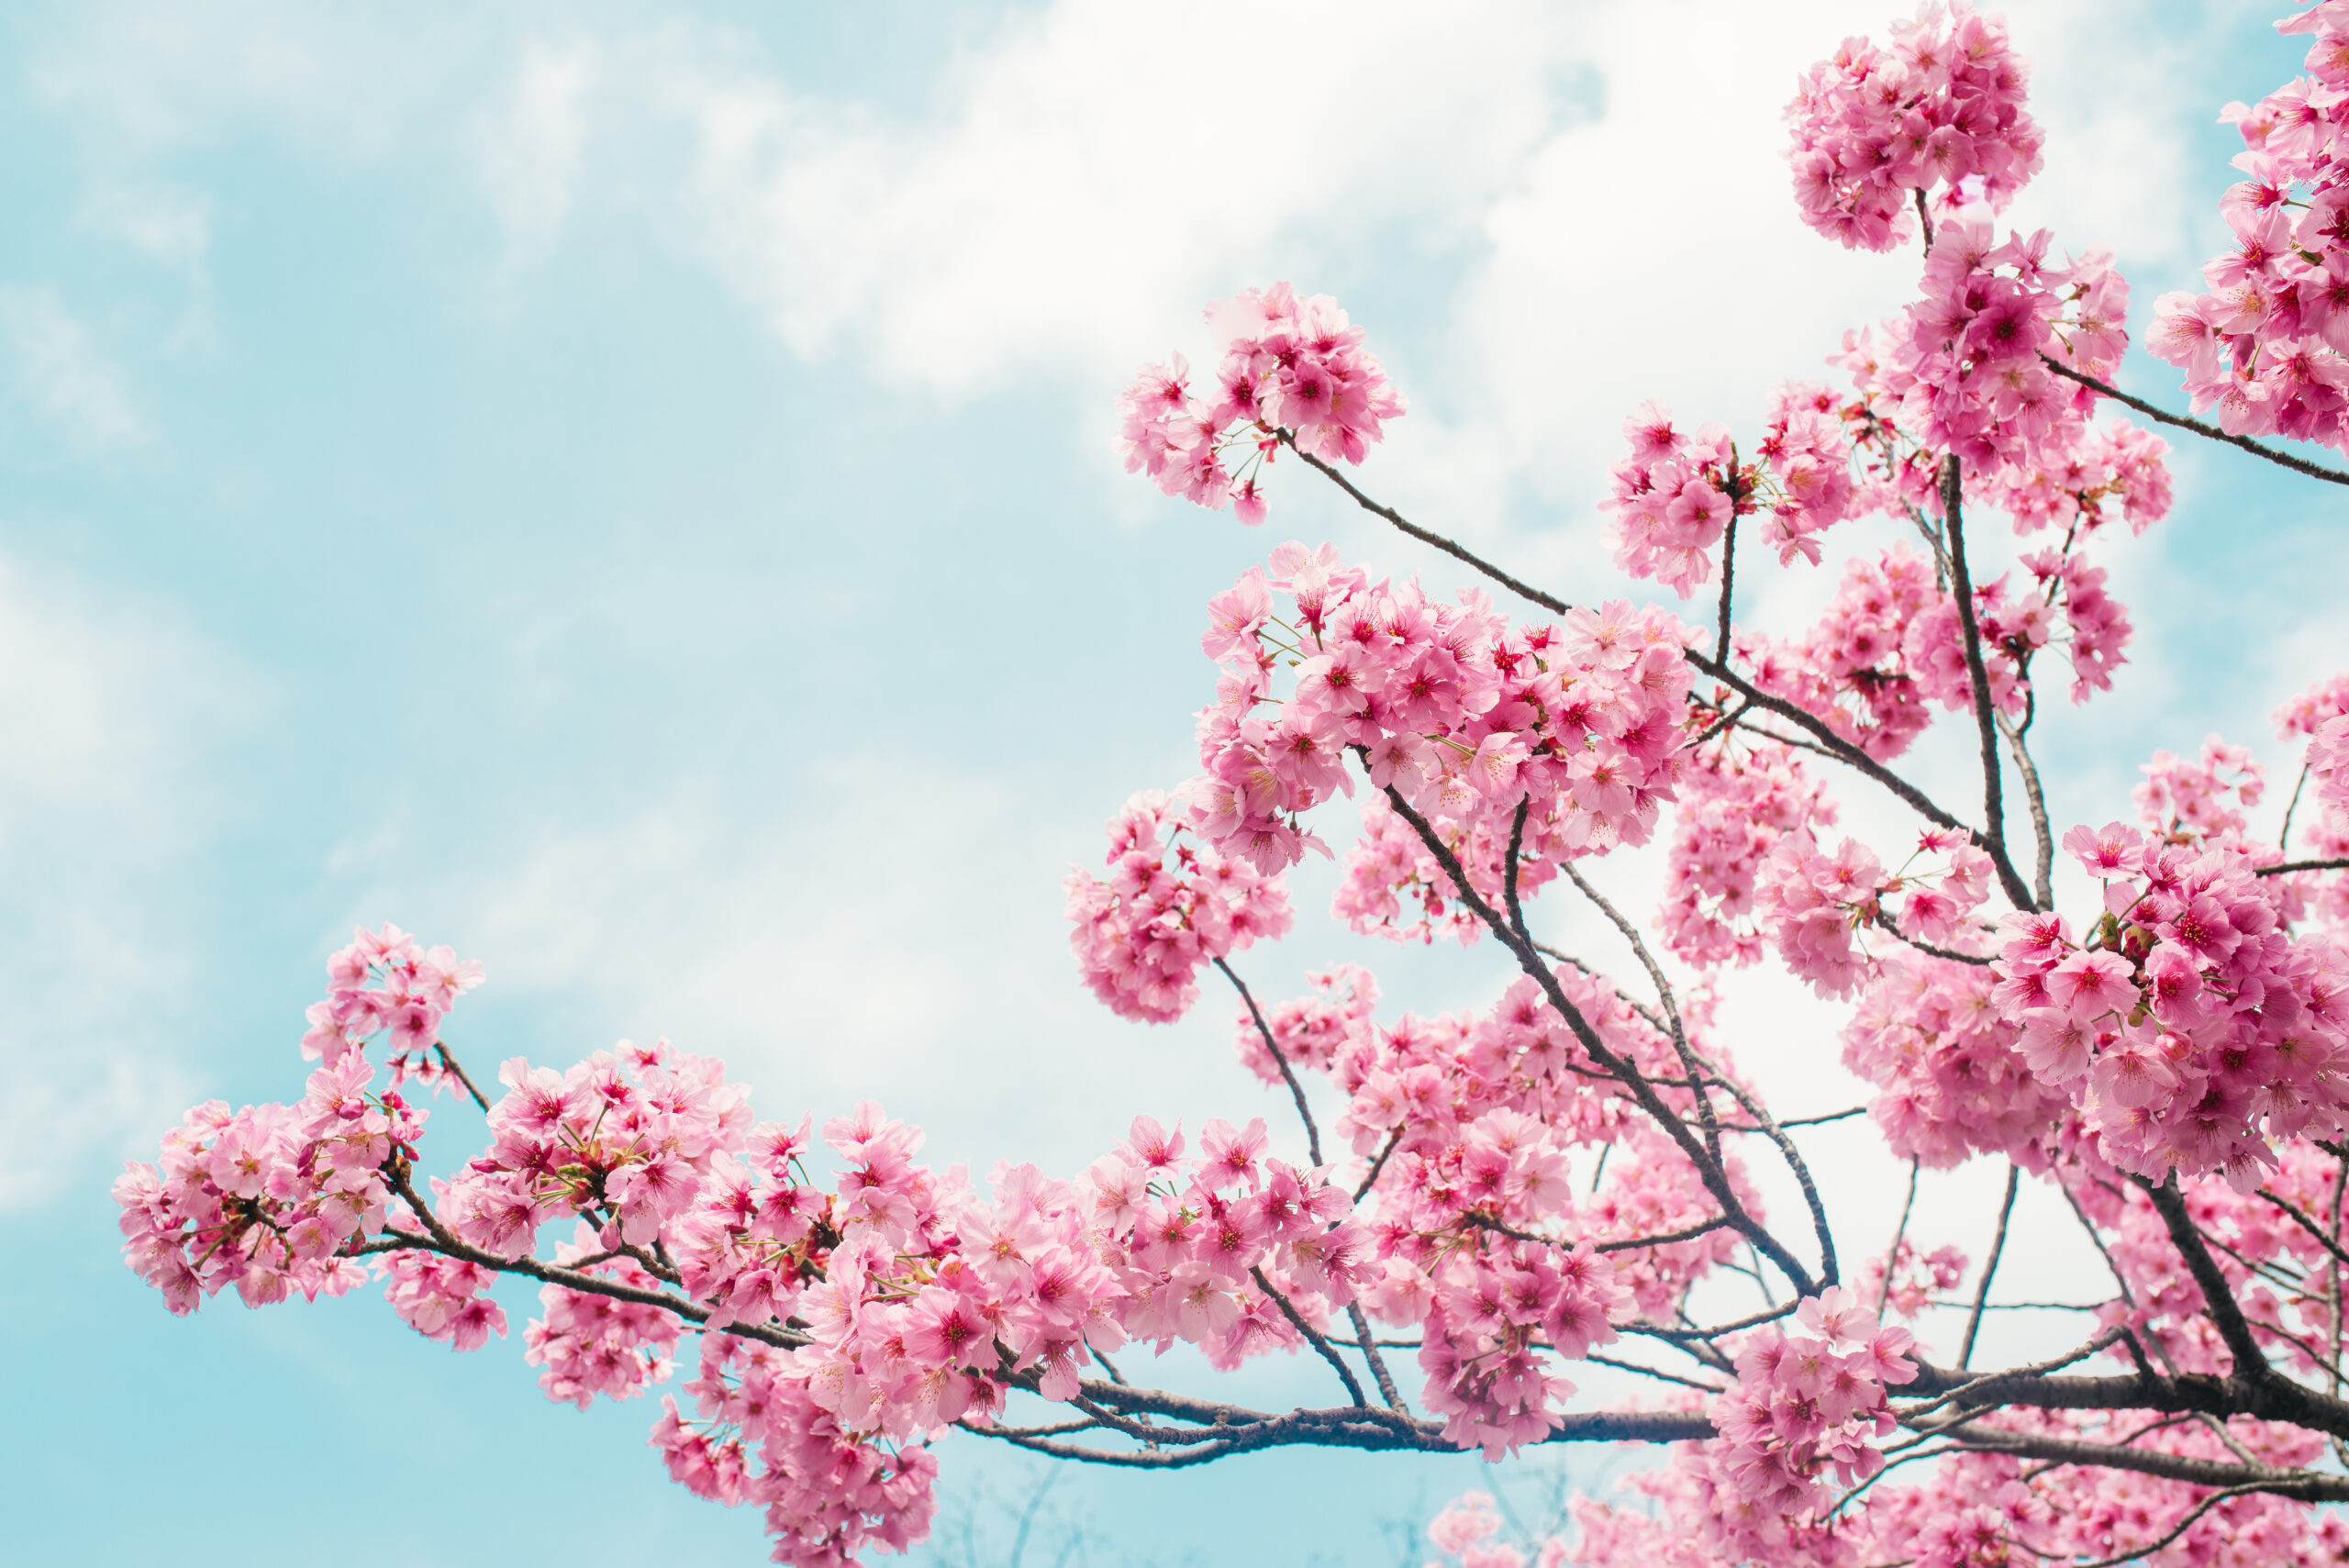 Beautiful Cherry Blossom Sakura In Spring Time Over Blue Sky - INNOCEAN UK 2024 SOCIAL REPORT